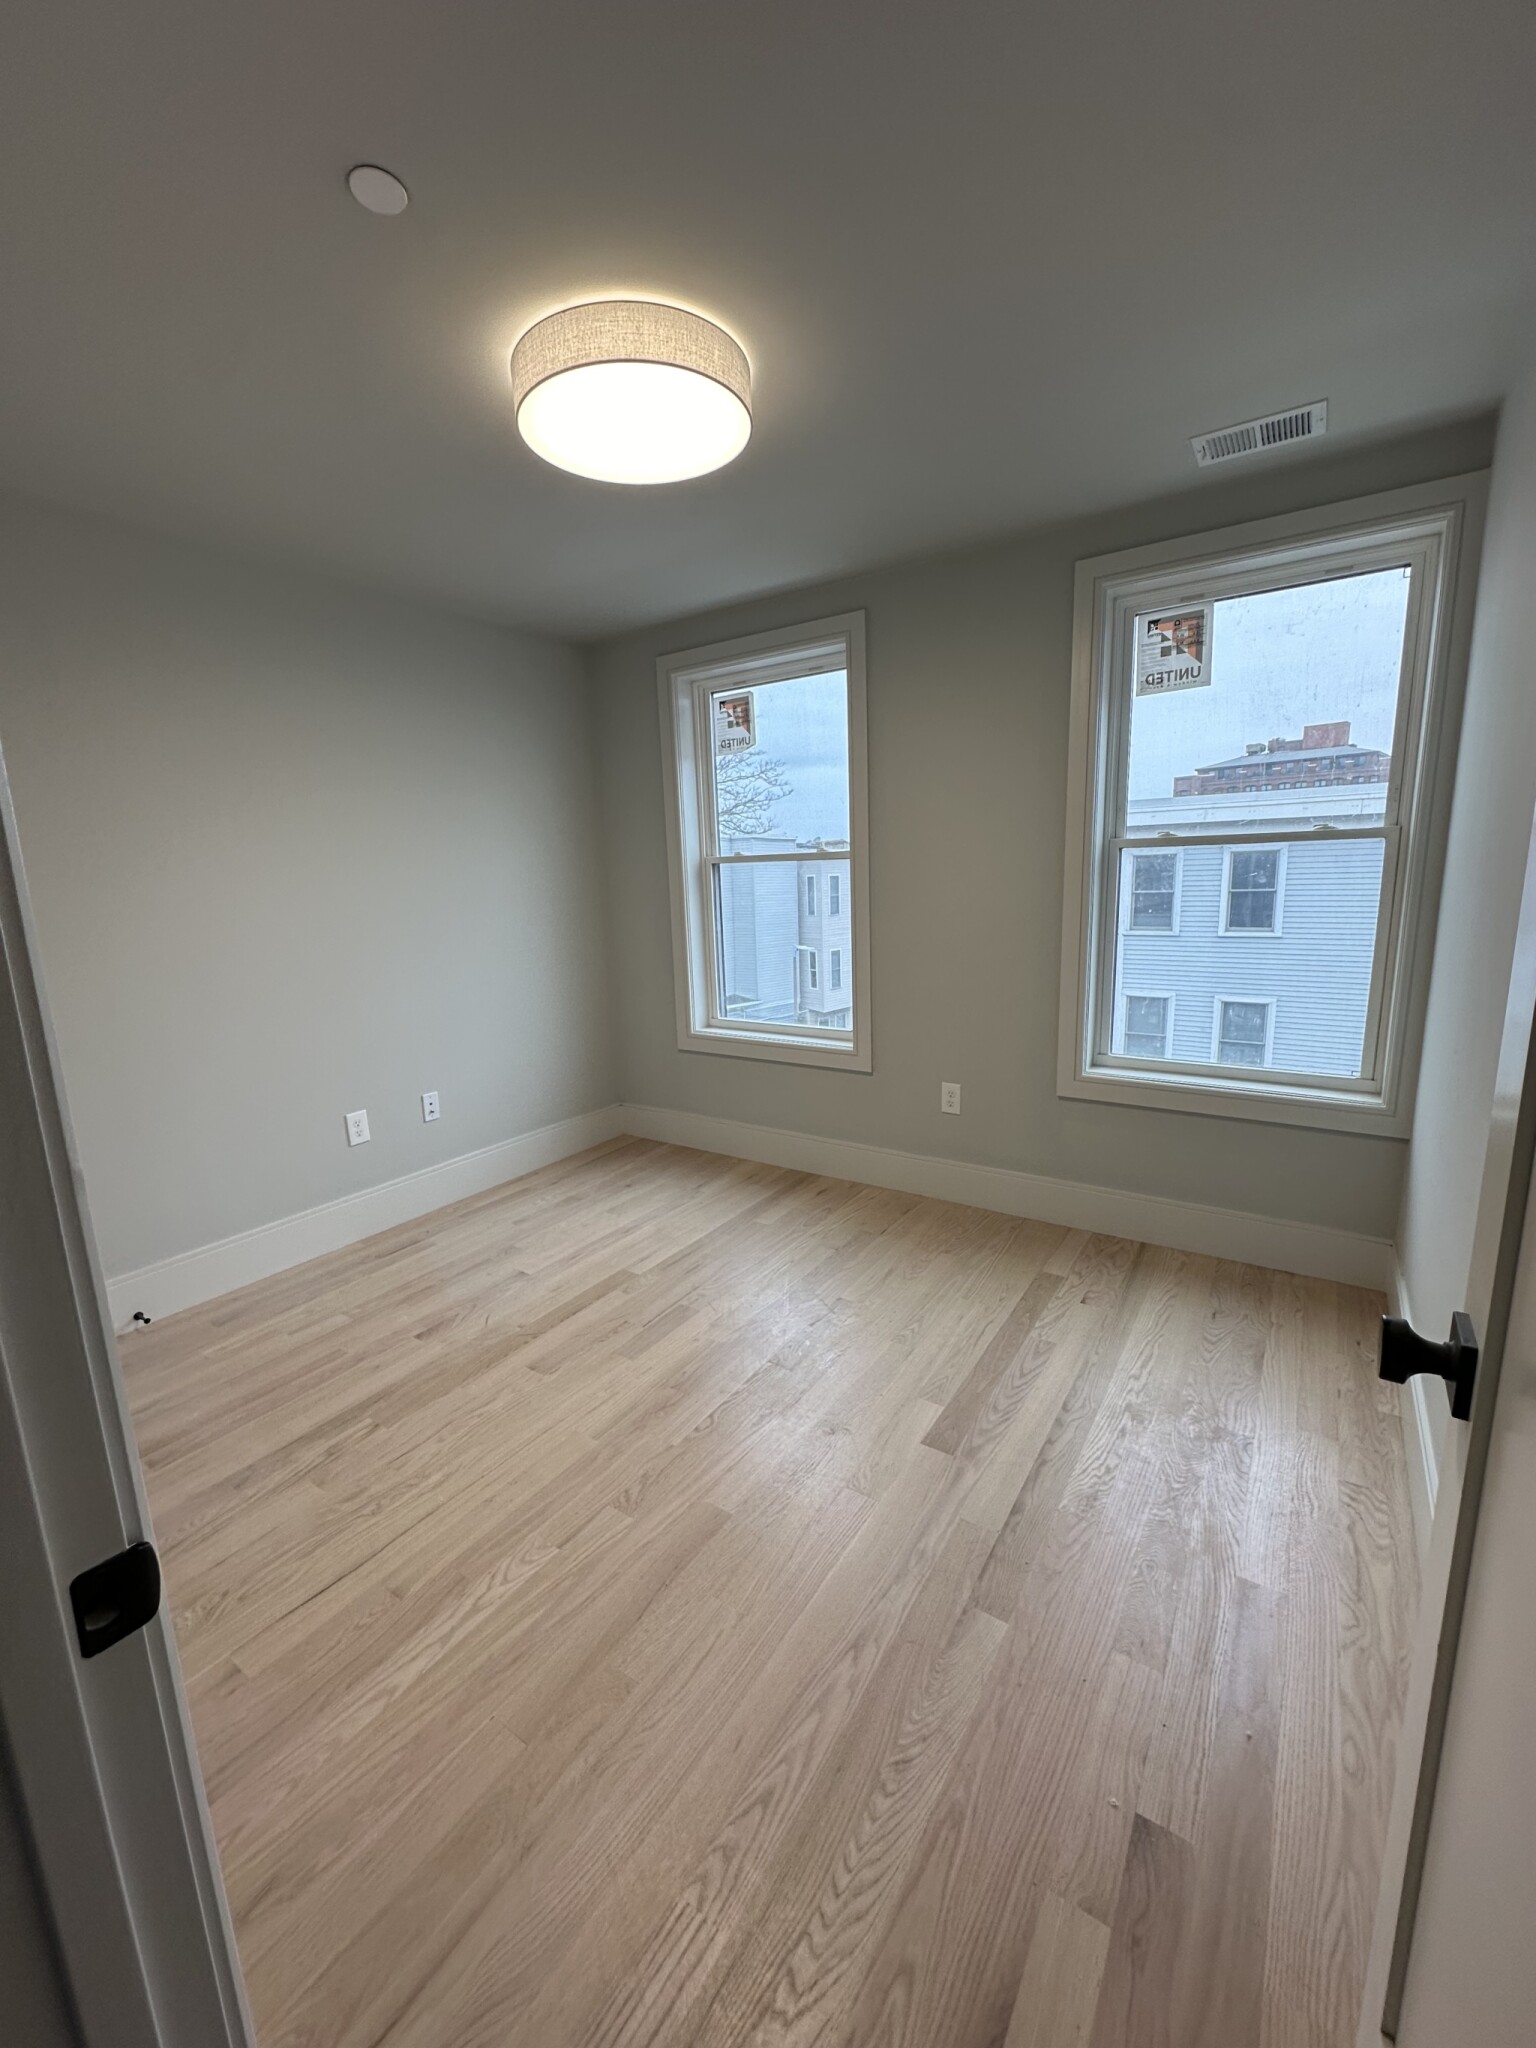 Photos of apartment on Maverick,Boston MA 02128